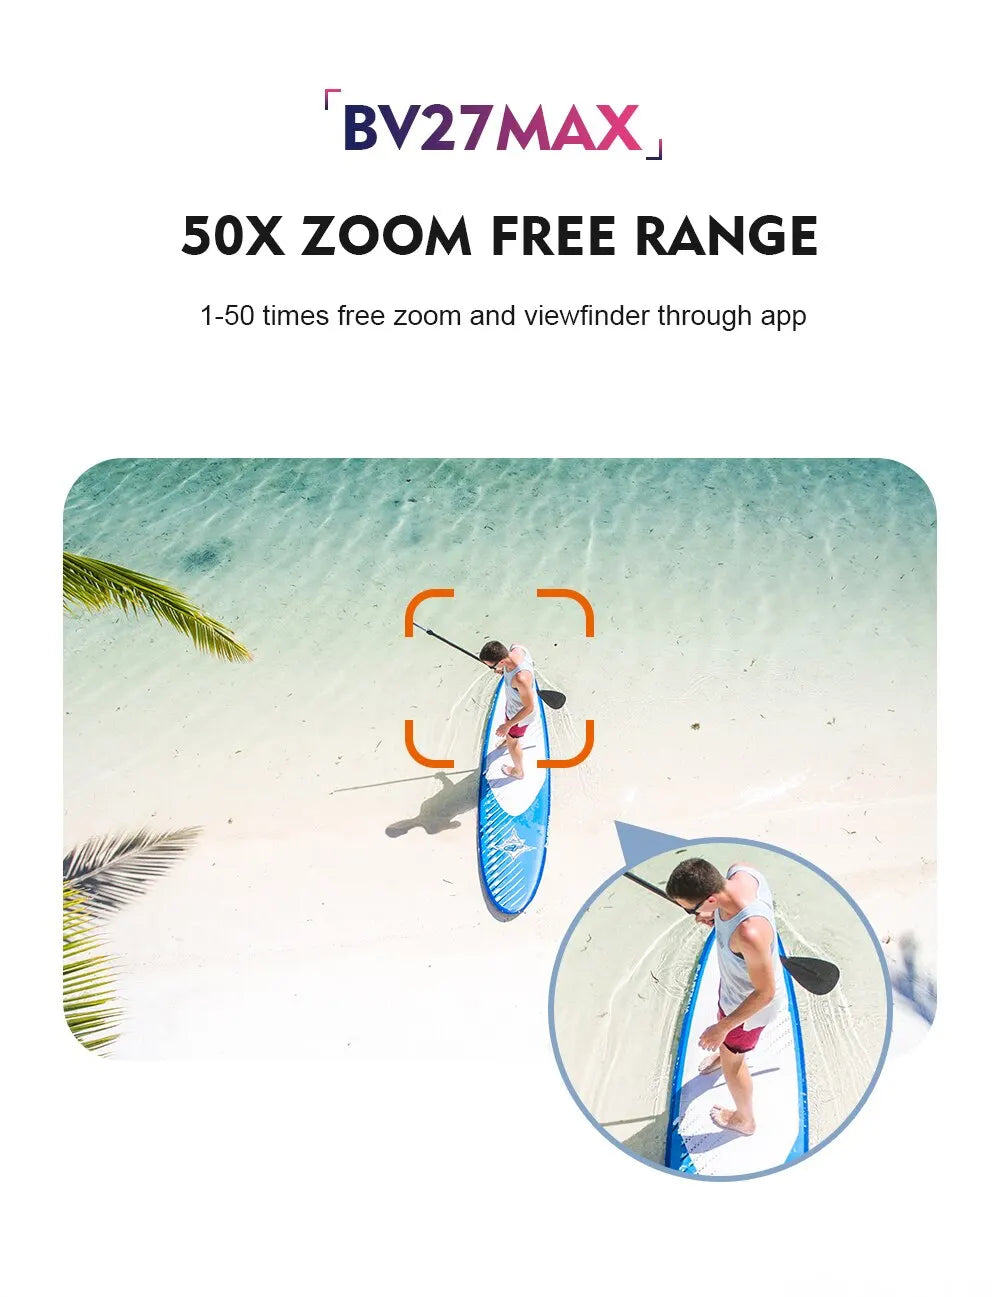 S29 Drone, BVZZMAX 50x ZOOM FREE RANGE 1-50 times free